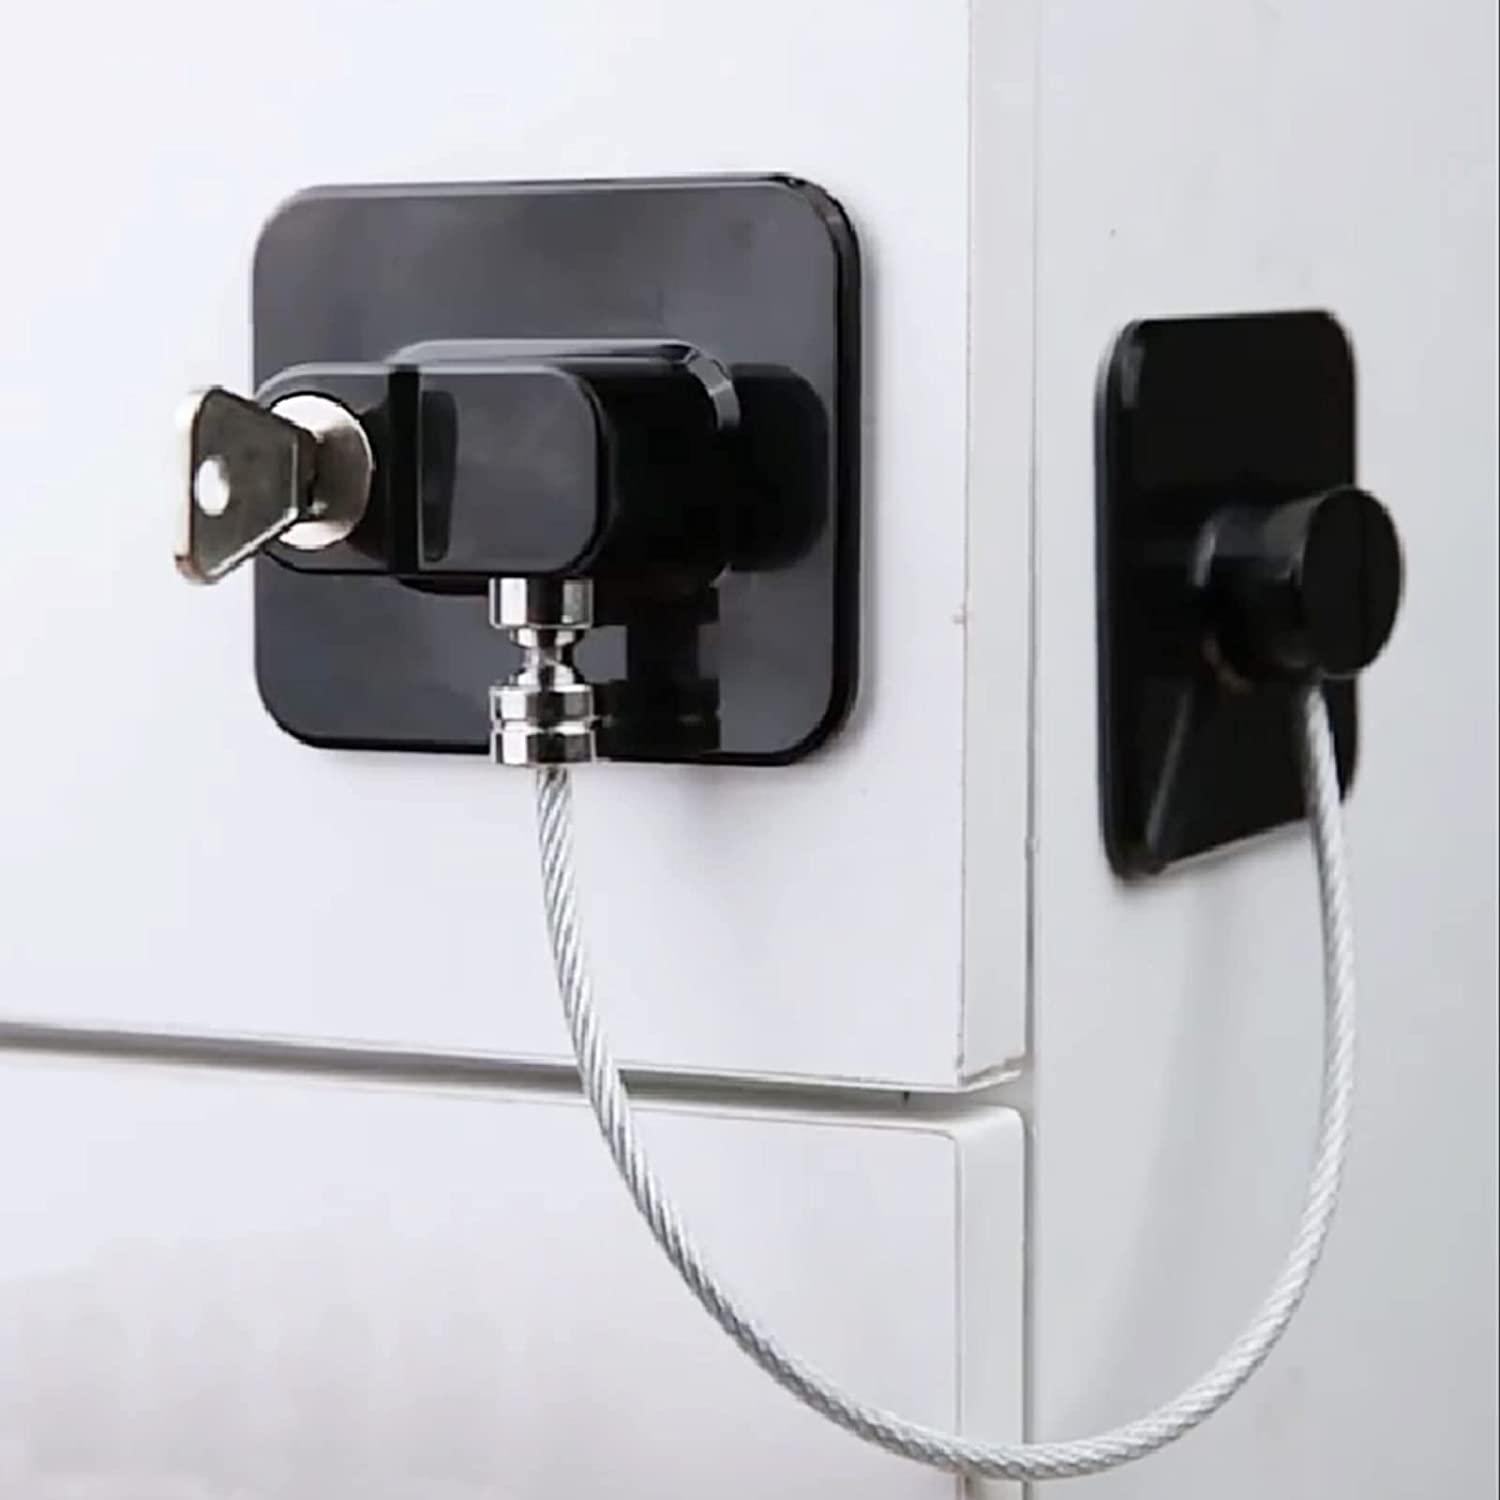 Homemaxs Mini Fridge Lock Digital Password Child Safety Lock Cabinet Drawer Lock (Black), Size: 29x7x2cm